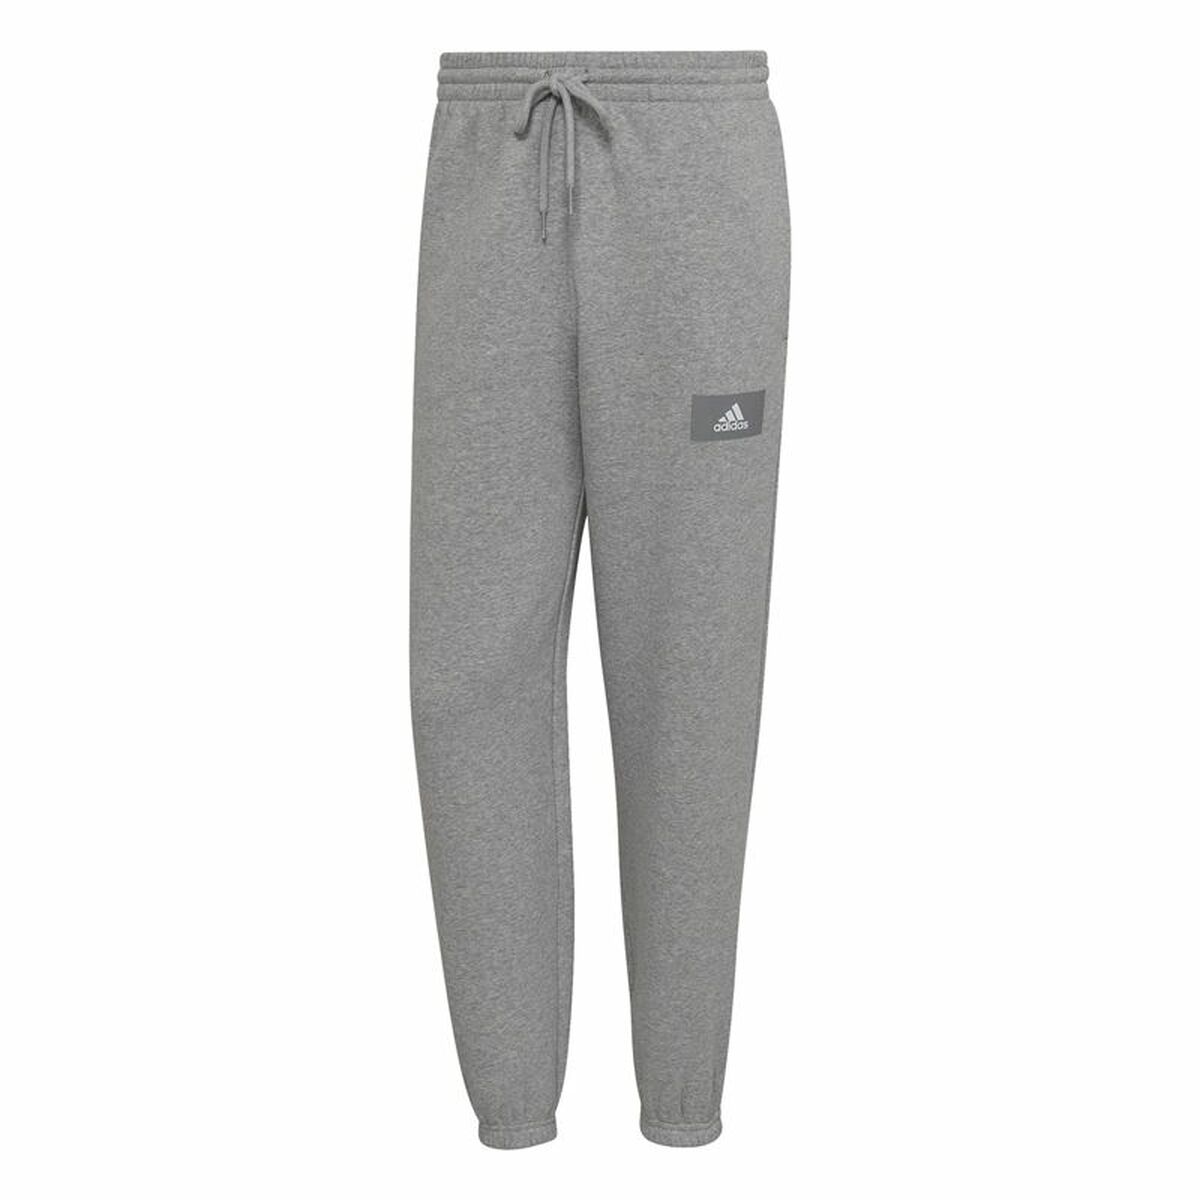 Pantaloni pentru Adulți Adidas Essentials FeelVivid Gri Bărbați - Mărime XL